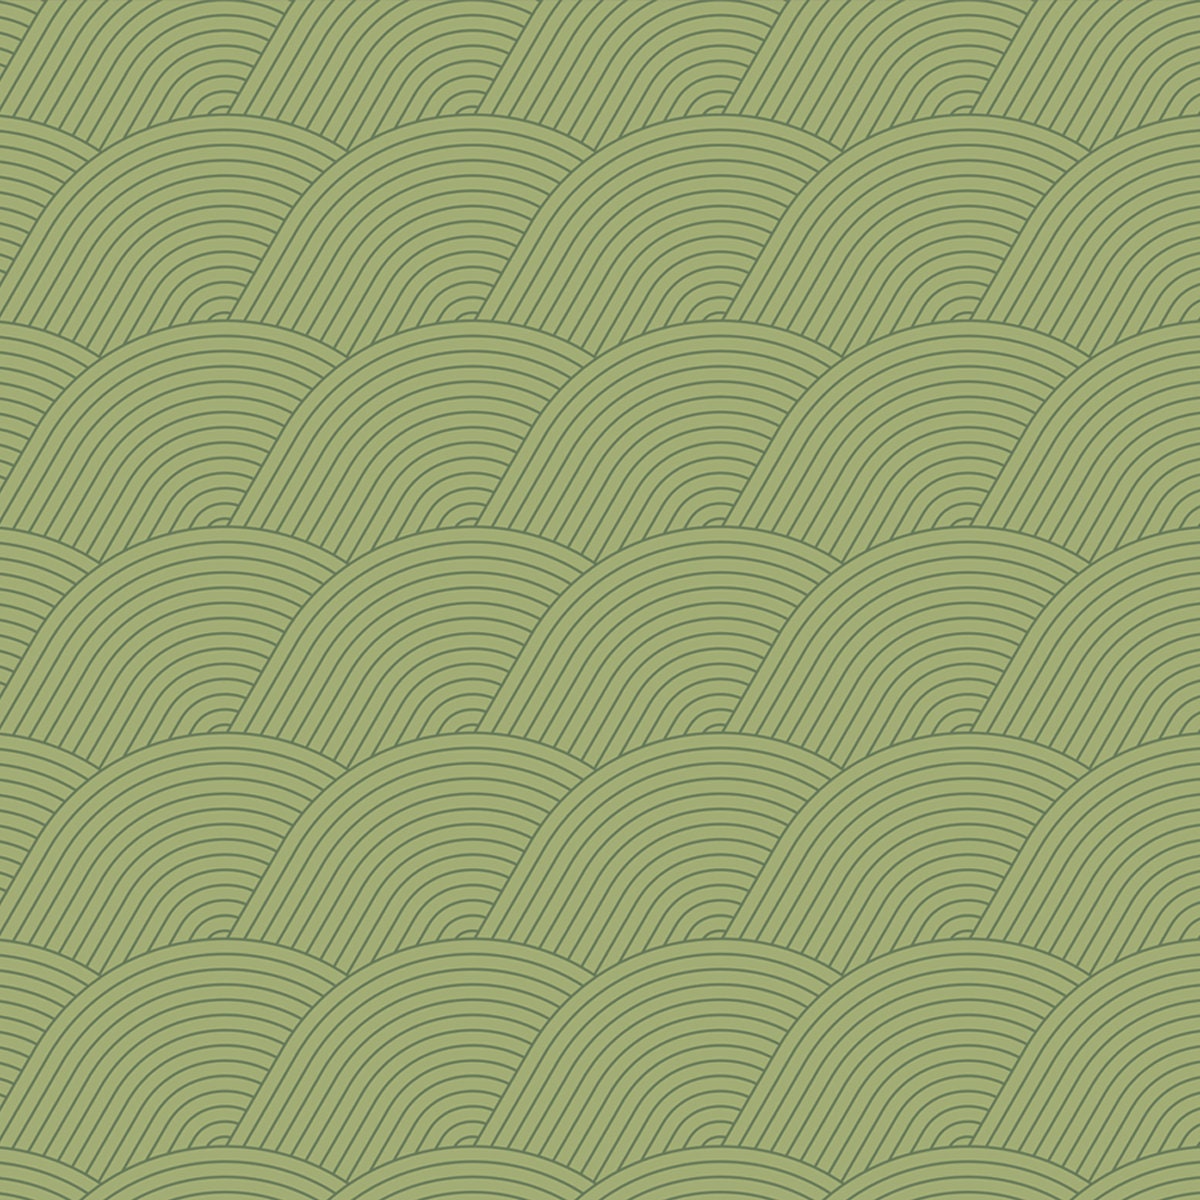 Green Zen, Abstract Field Seamless Vector Pattern. Calming, Flowing Linear Design. Geometric, Oriental Inspired Wallpaper Dining Room Mural